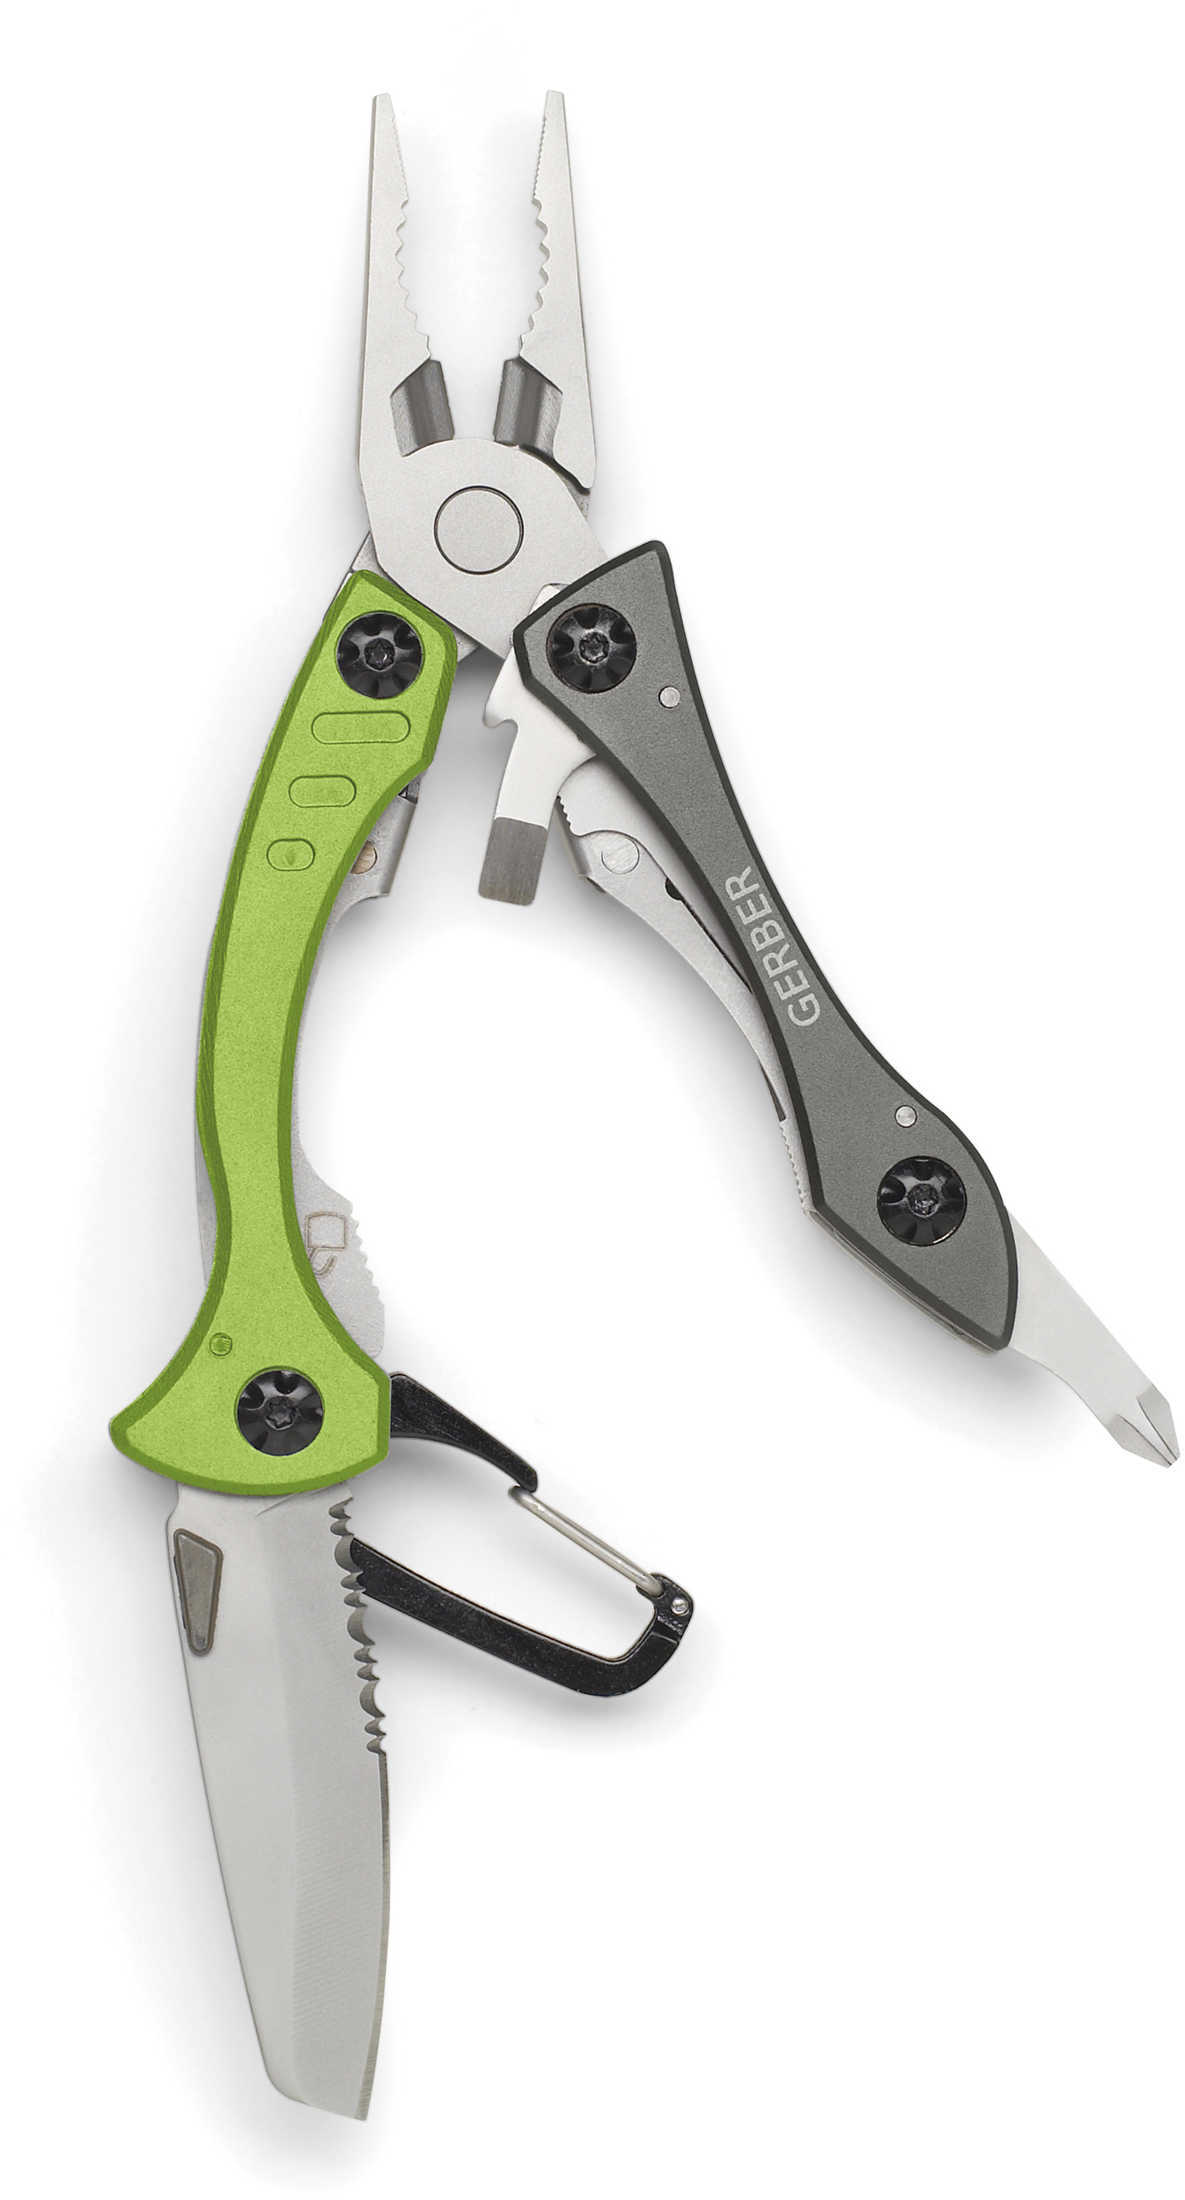 Gerber Blades Crucial Tool Green, Clam Pack 31-000238